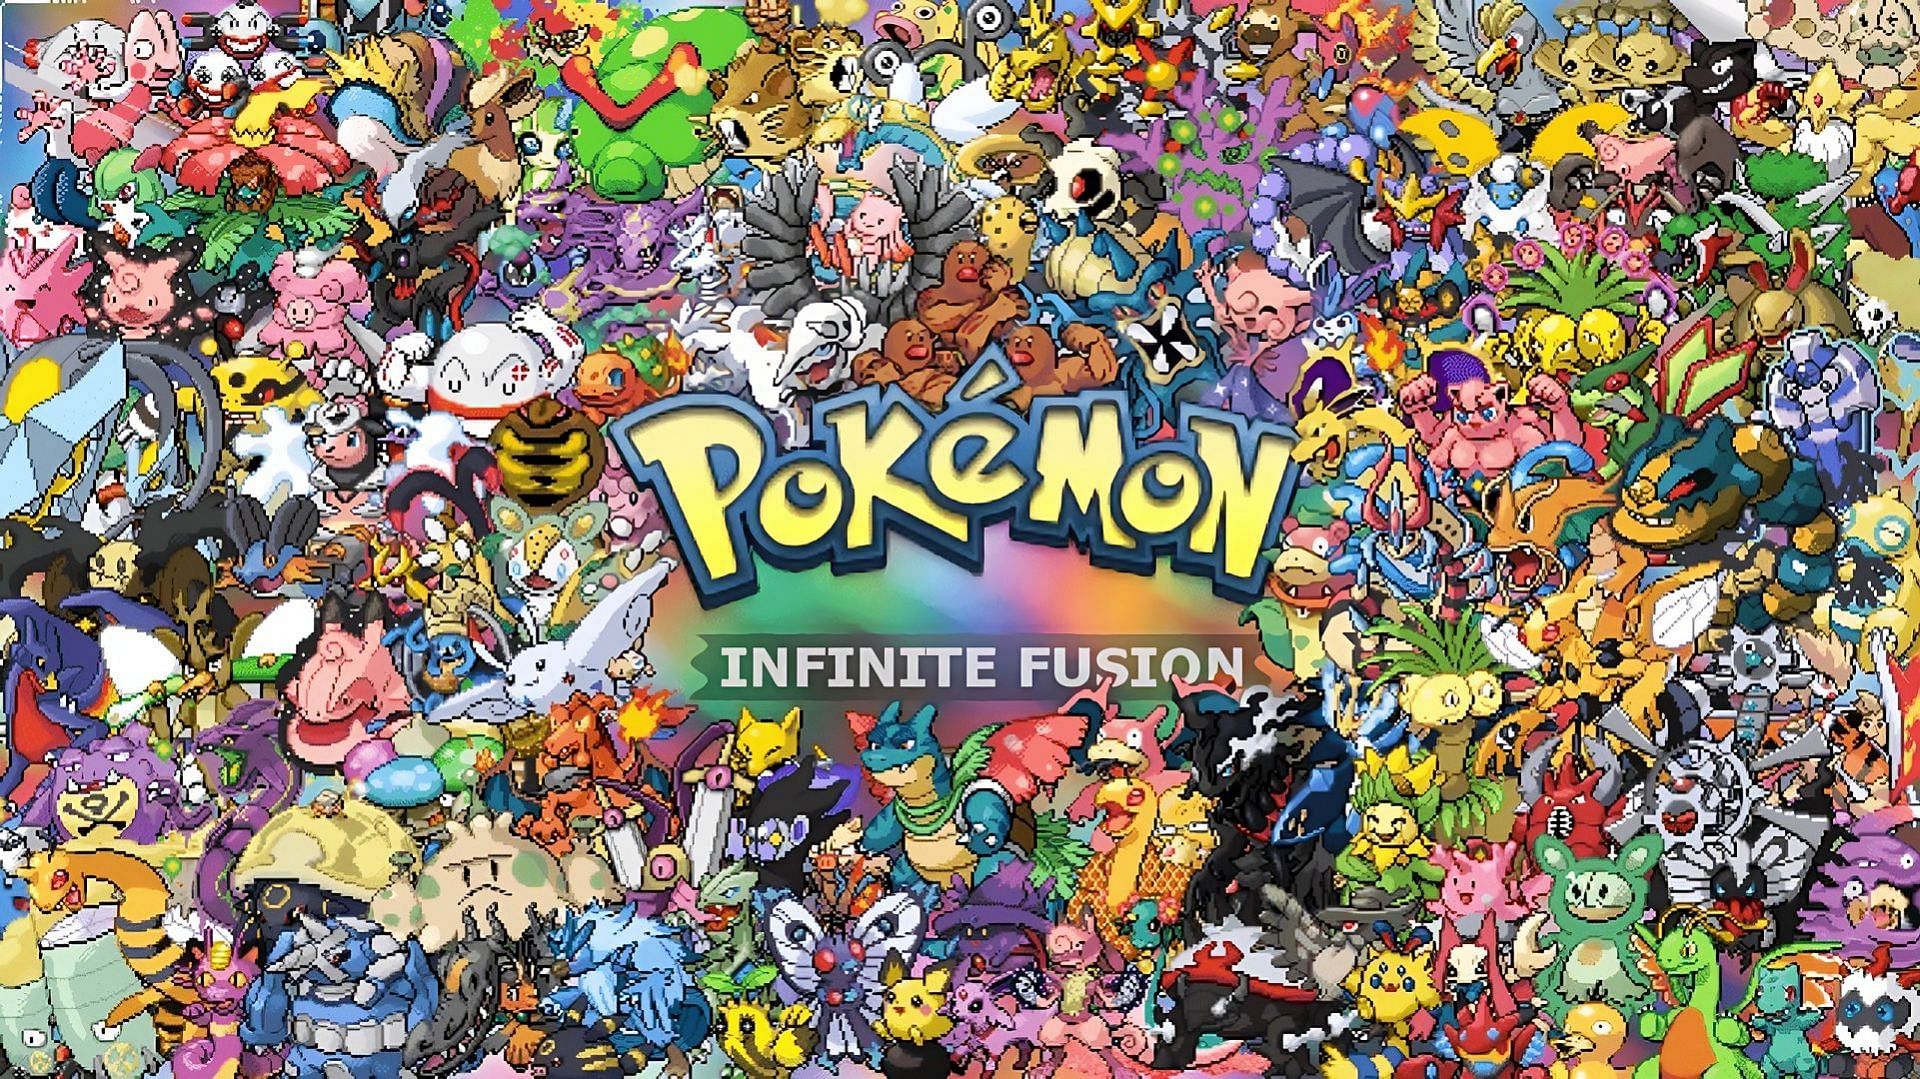 Pokemon Infinite Fusion - Official Game